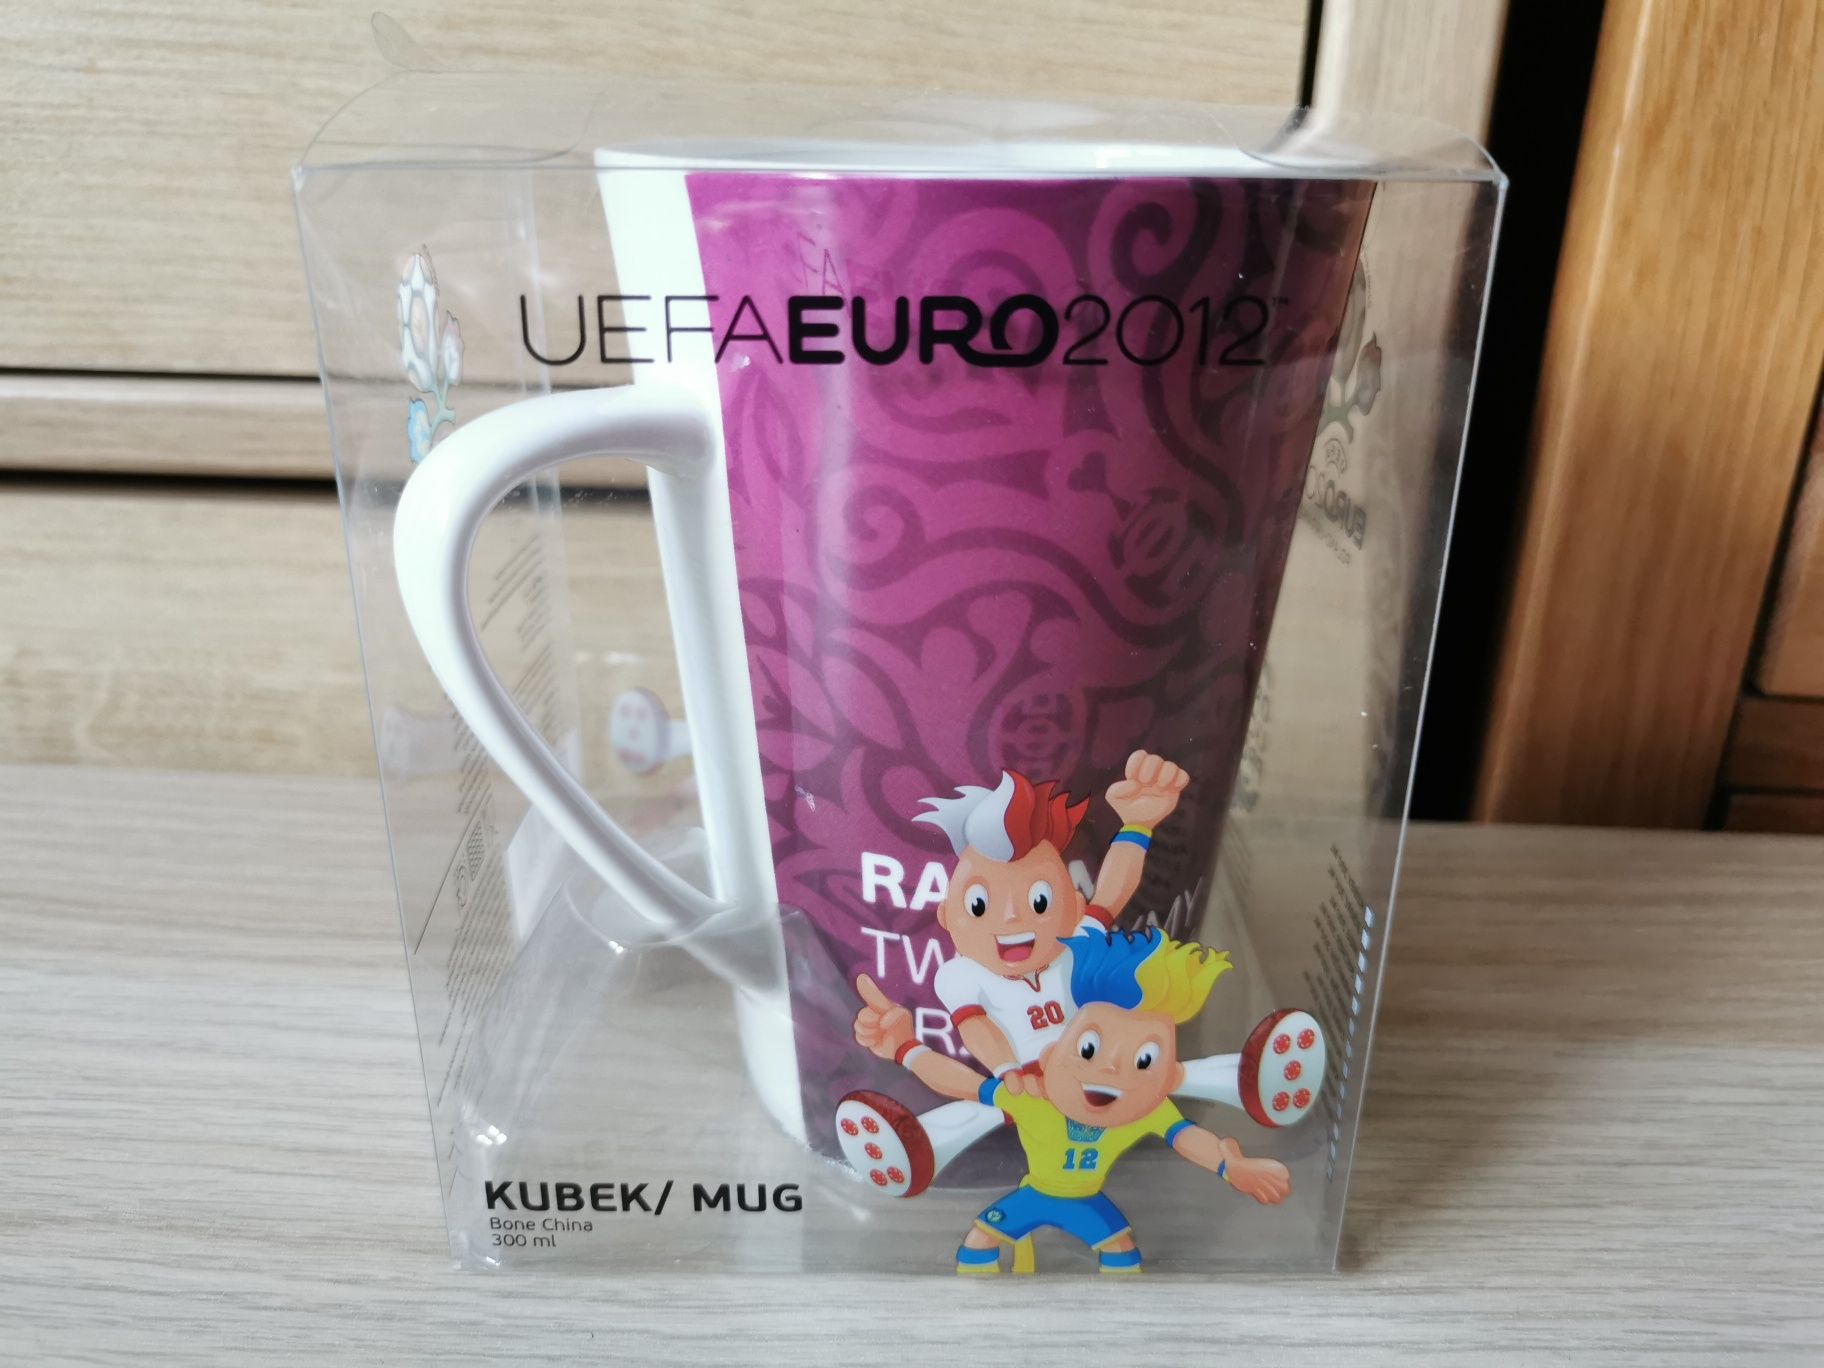 Kubek kolekcjonerski Euro 2012 Polska Ukraina